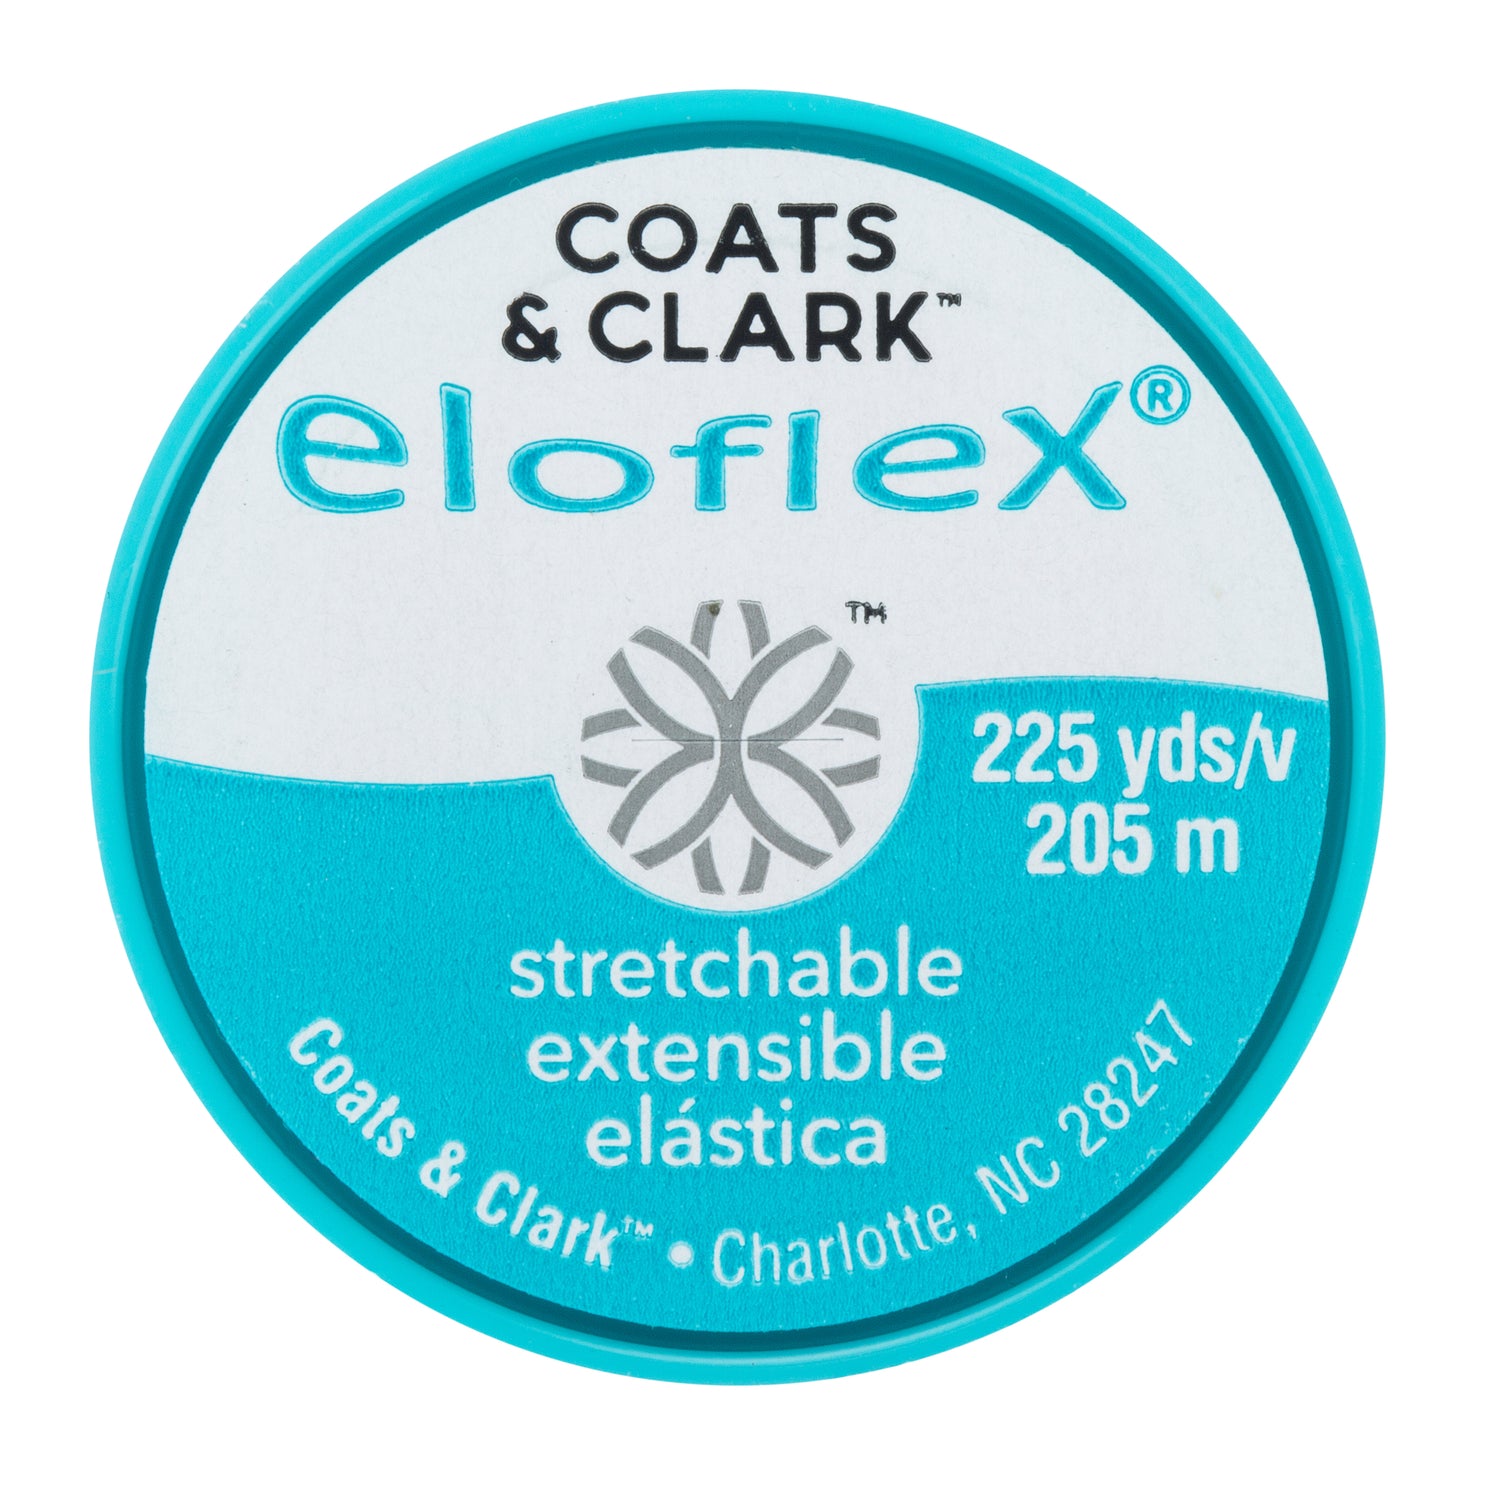 Coats & Clark Eloflex Stretchable Thread